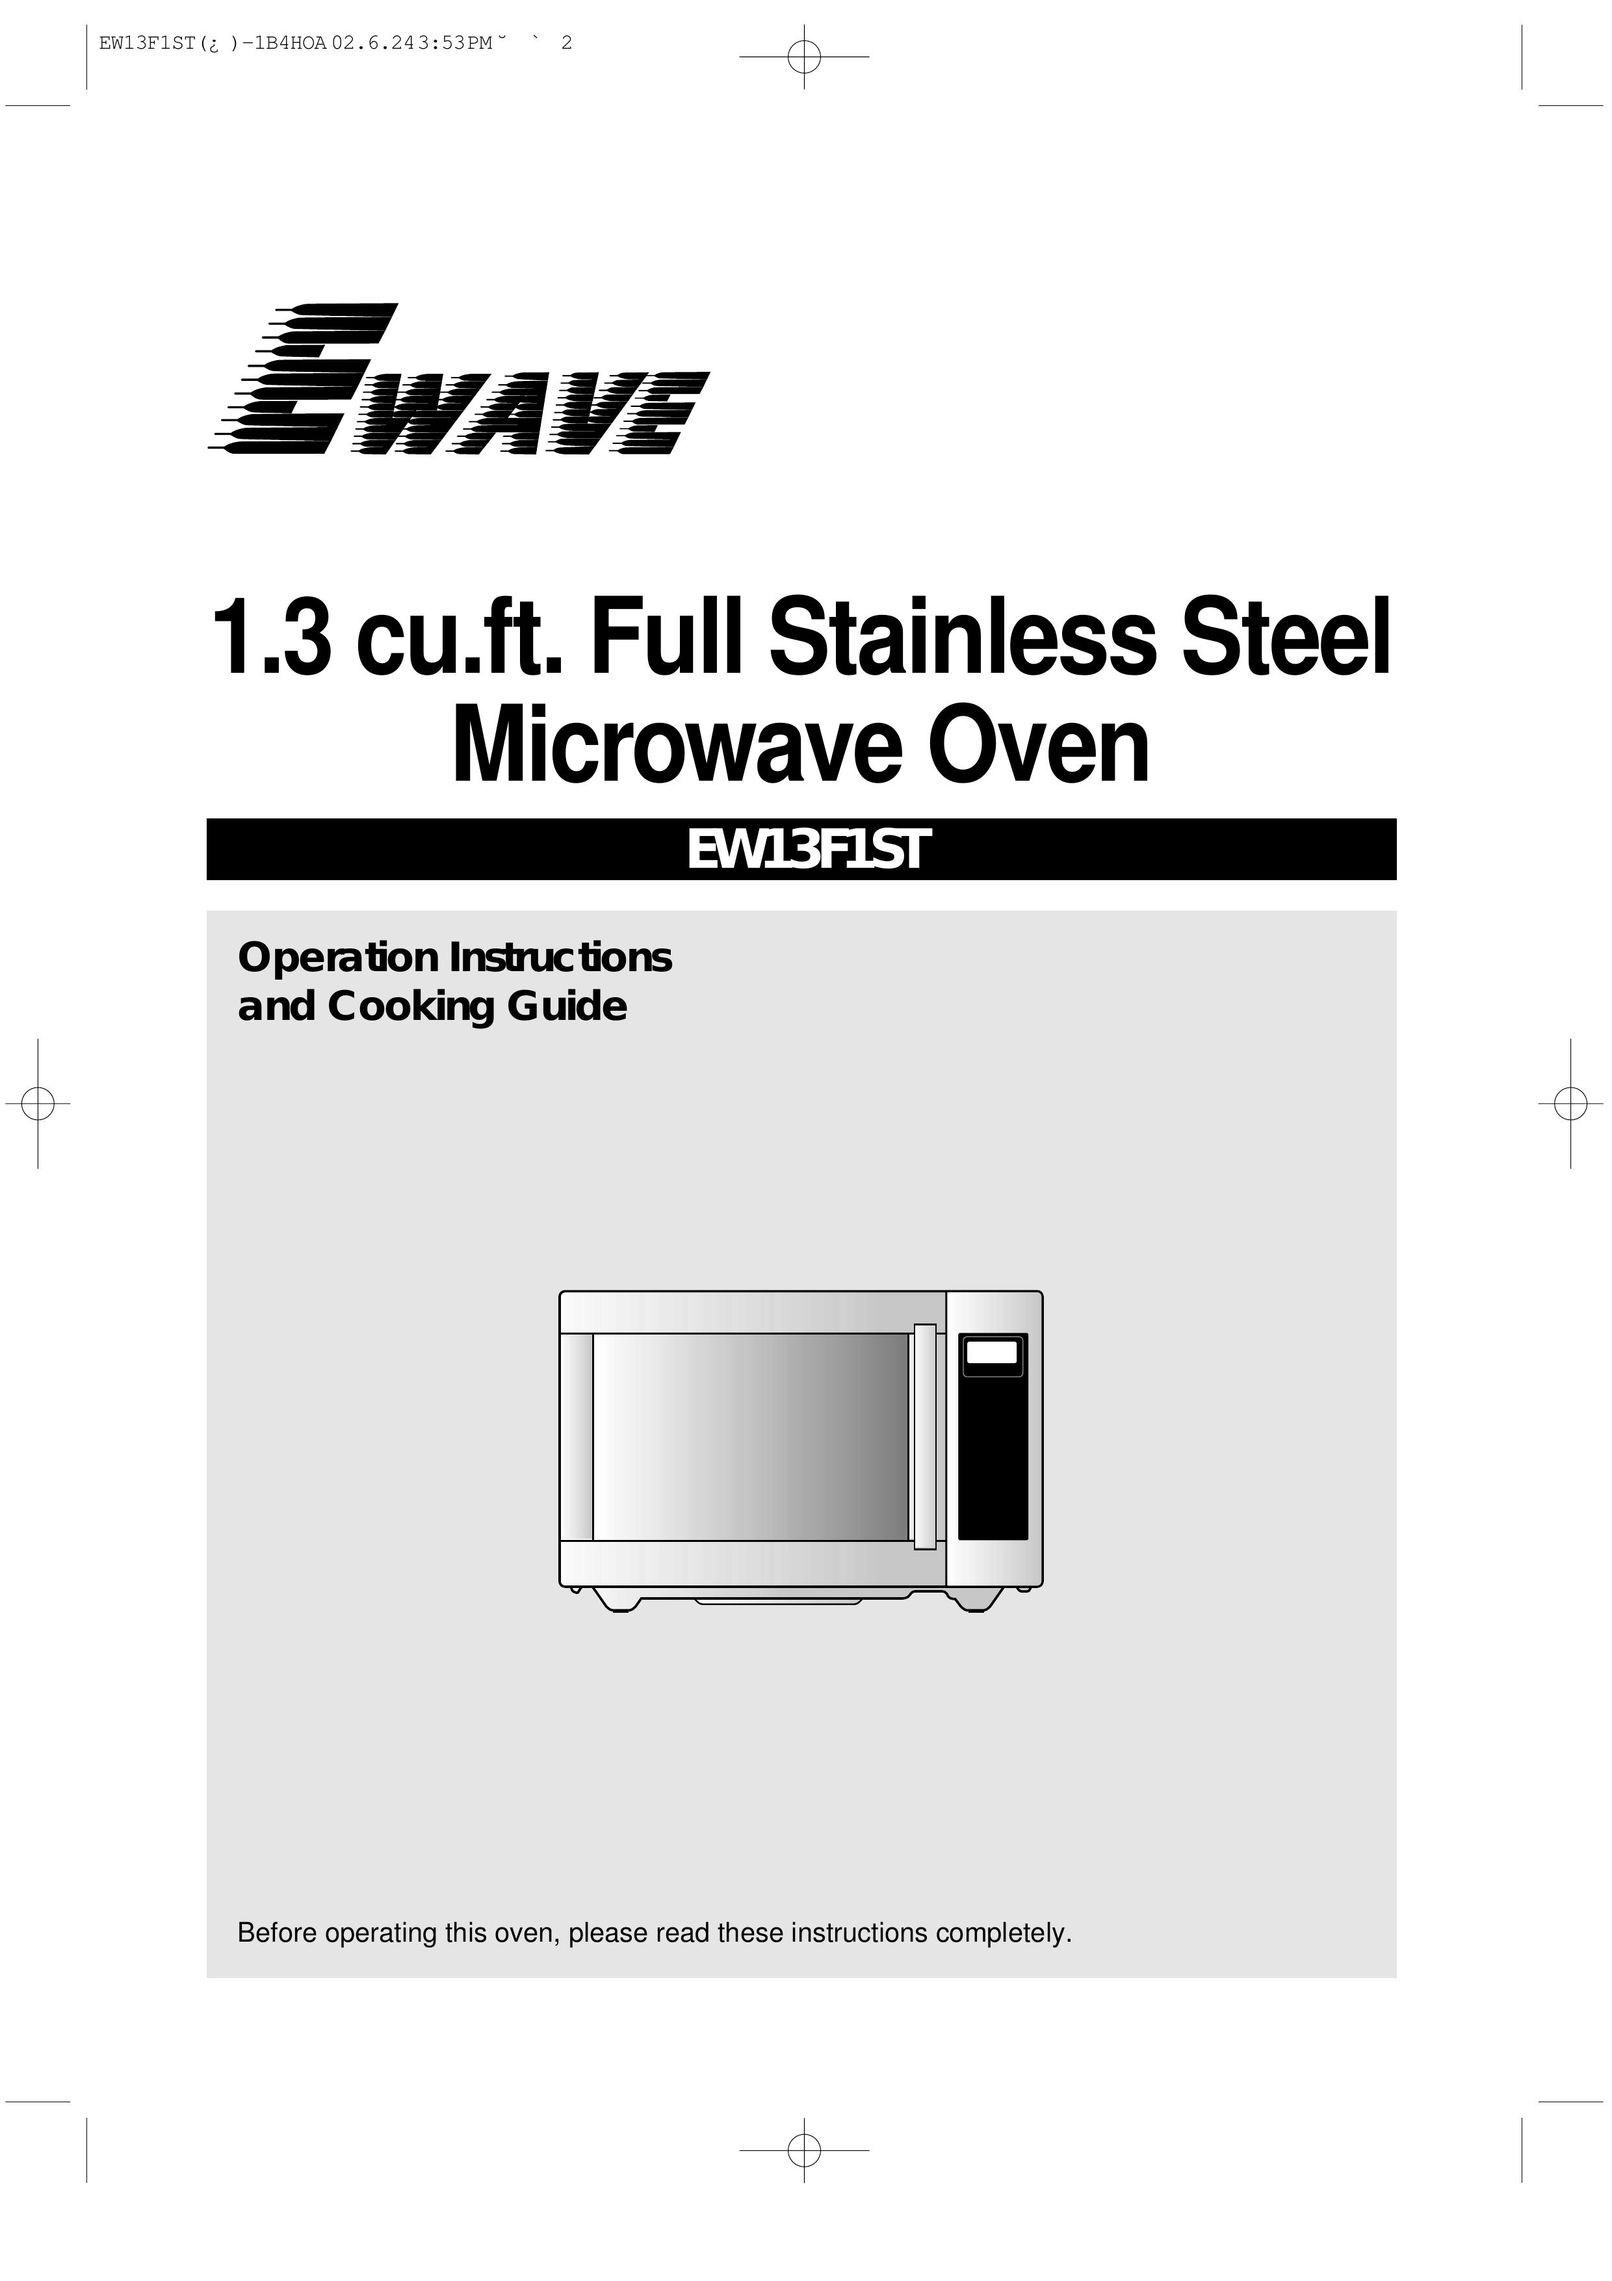 Daewoo EW13F1ST Microwave Oven User Manual